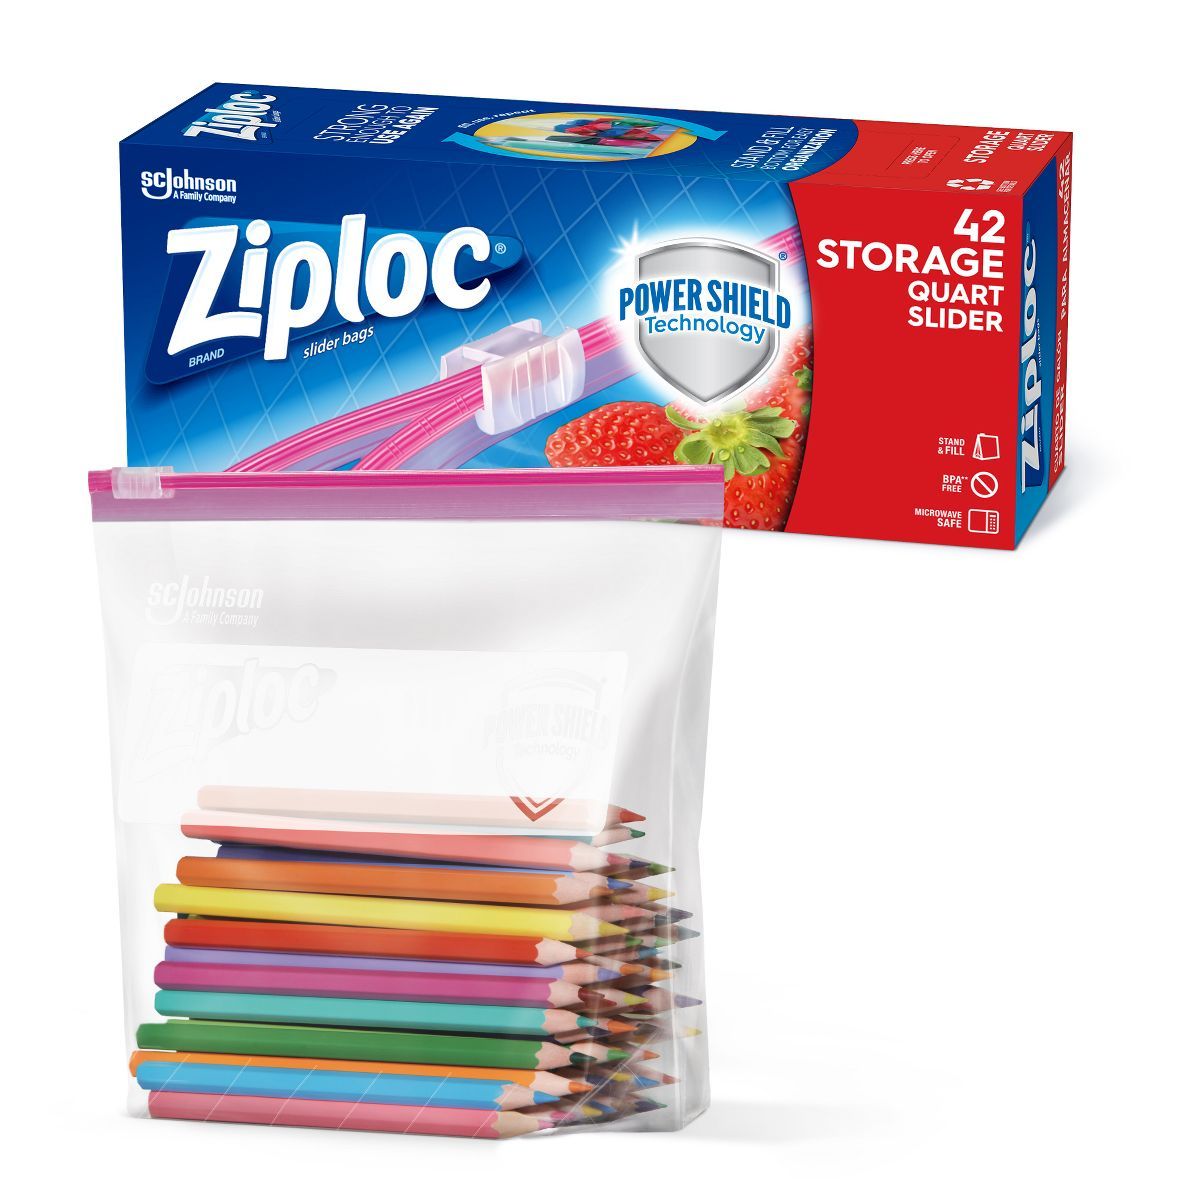 Ziploc Slider Storage Quart Bags | Target